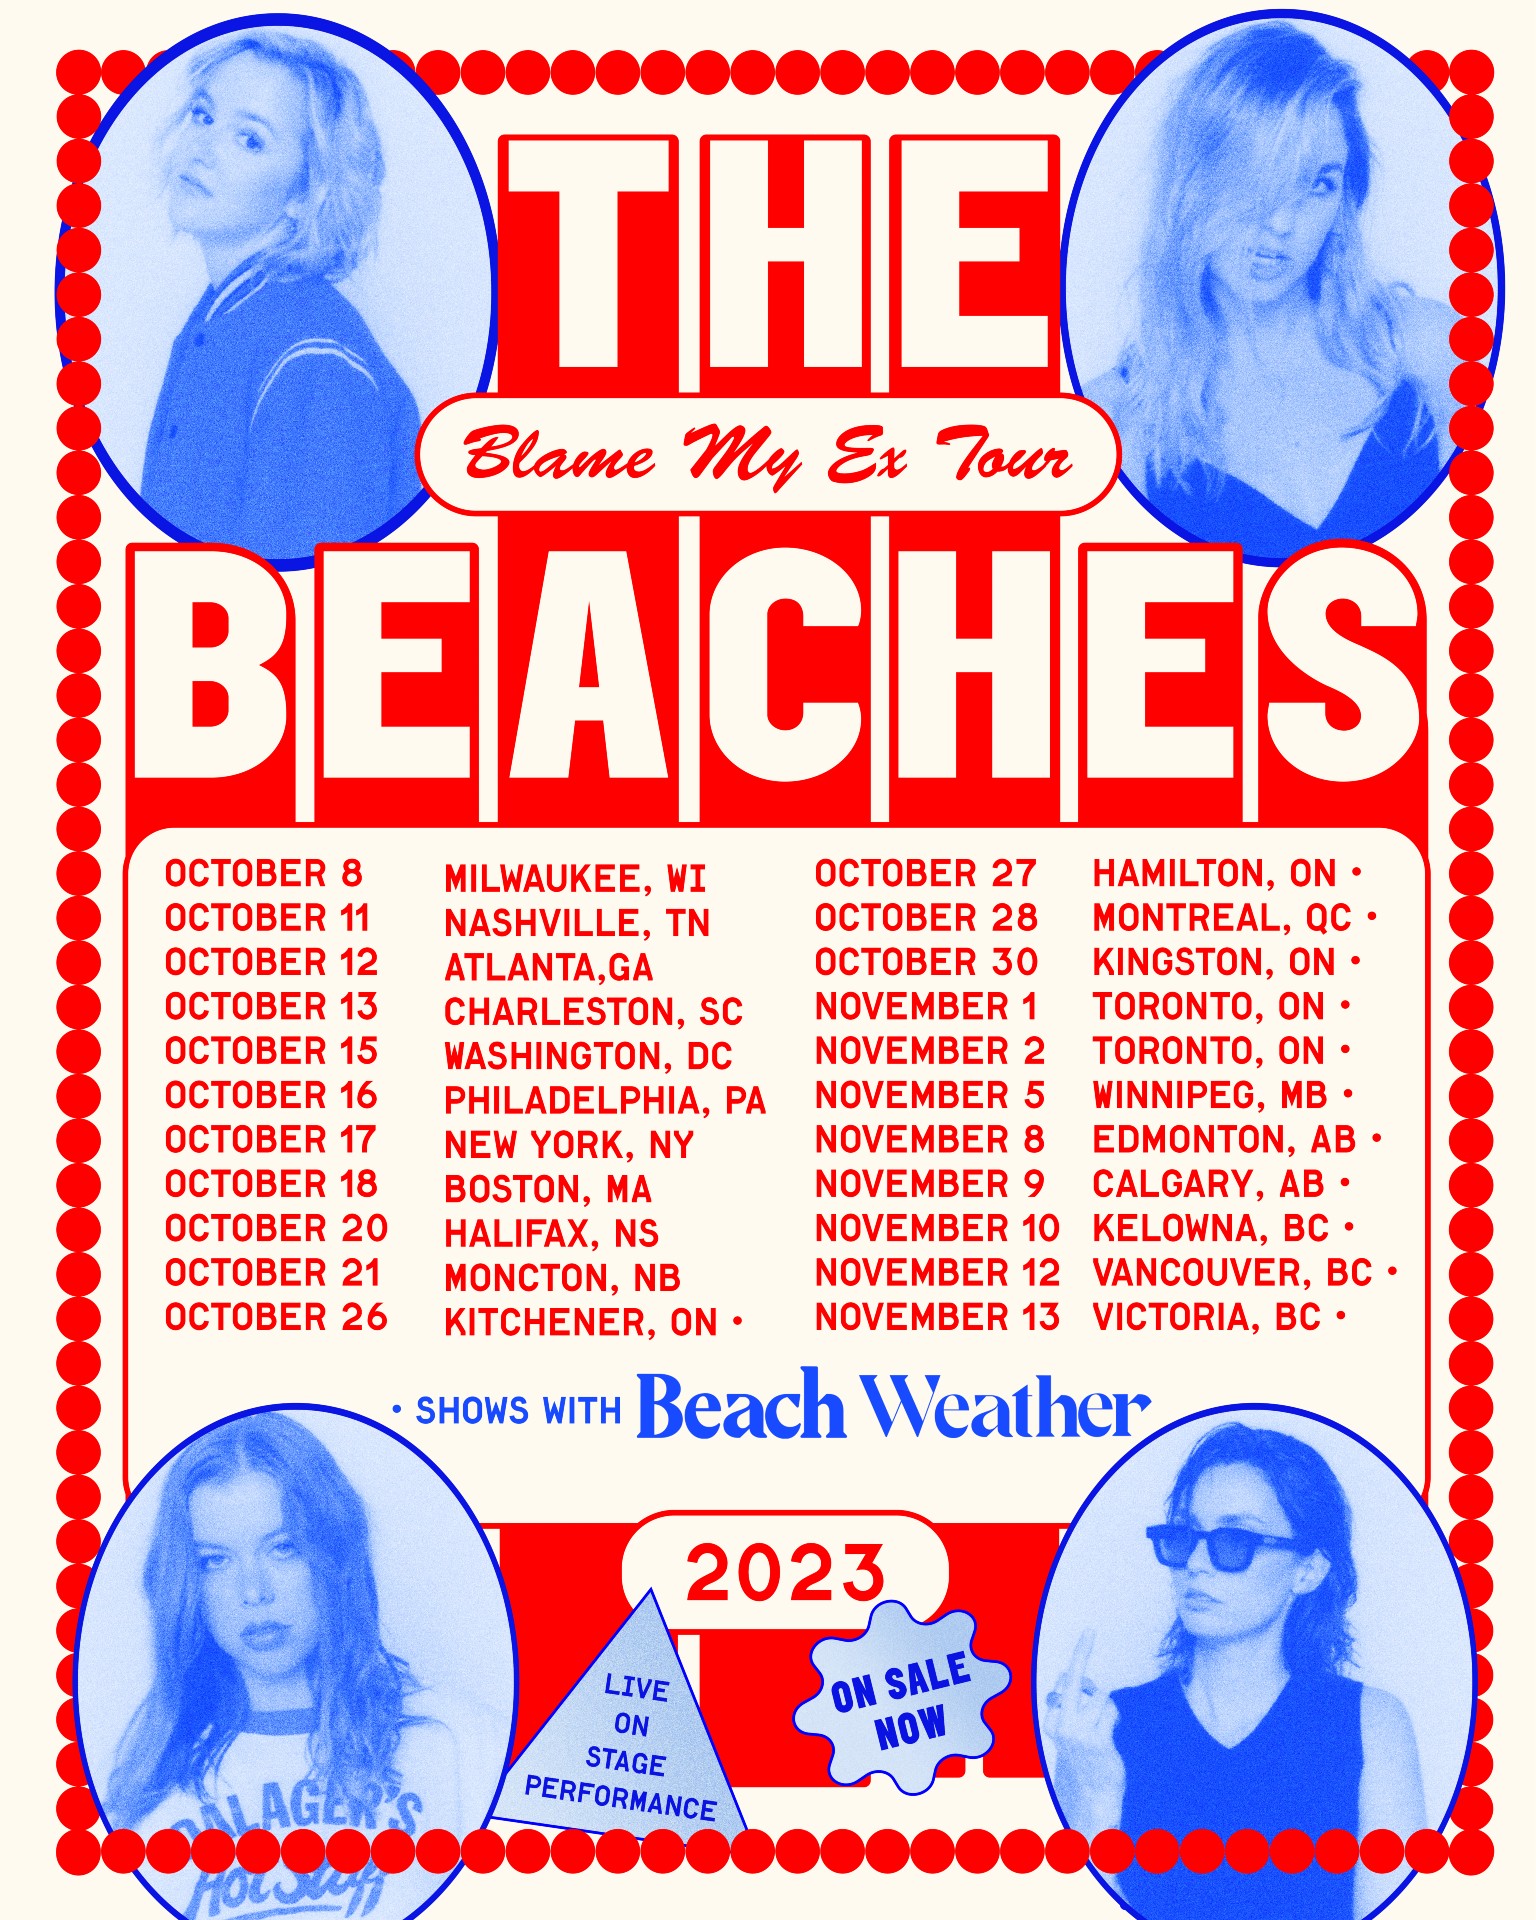 The Beaches “Blame My Ex Tour” poster